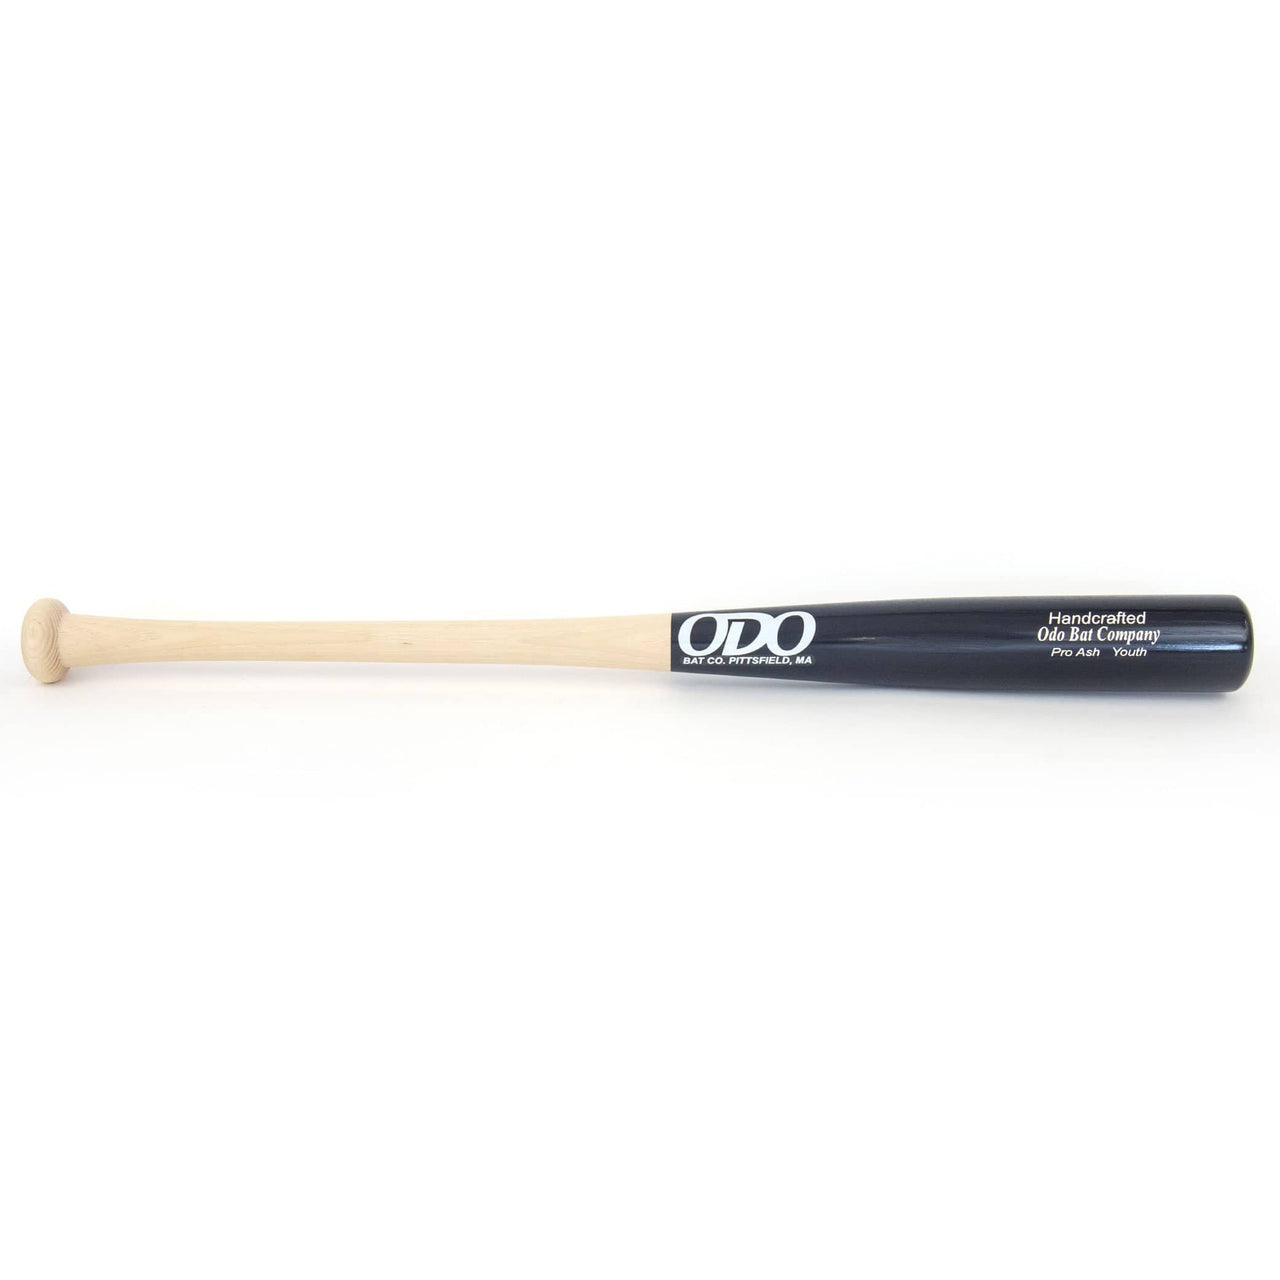 ODO Bats Playing Bats Natural | Black | White / 28" / (-3) Odo Bat Co. Pro Ash Youth Wood Baseball Bat | Ash